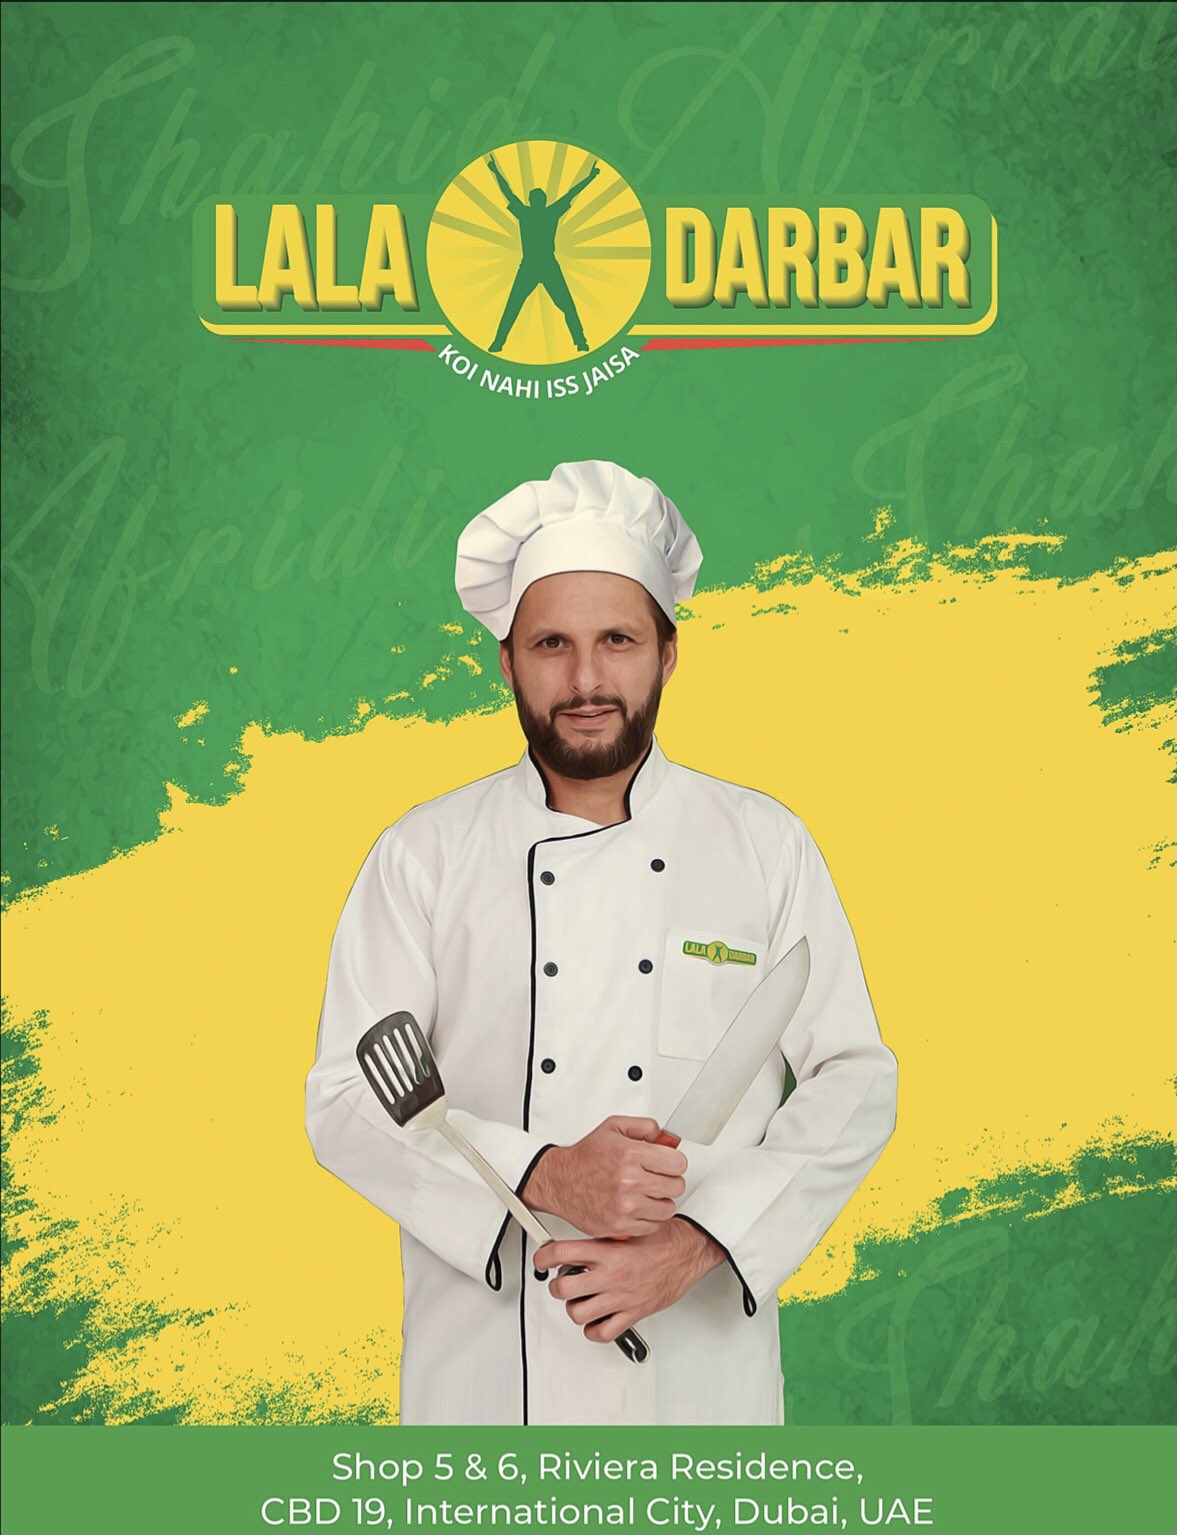 Lala Darbar